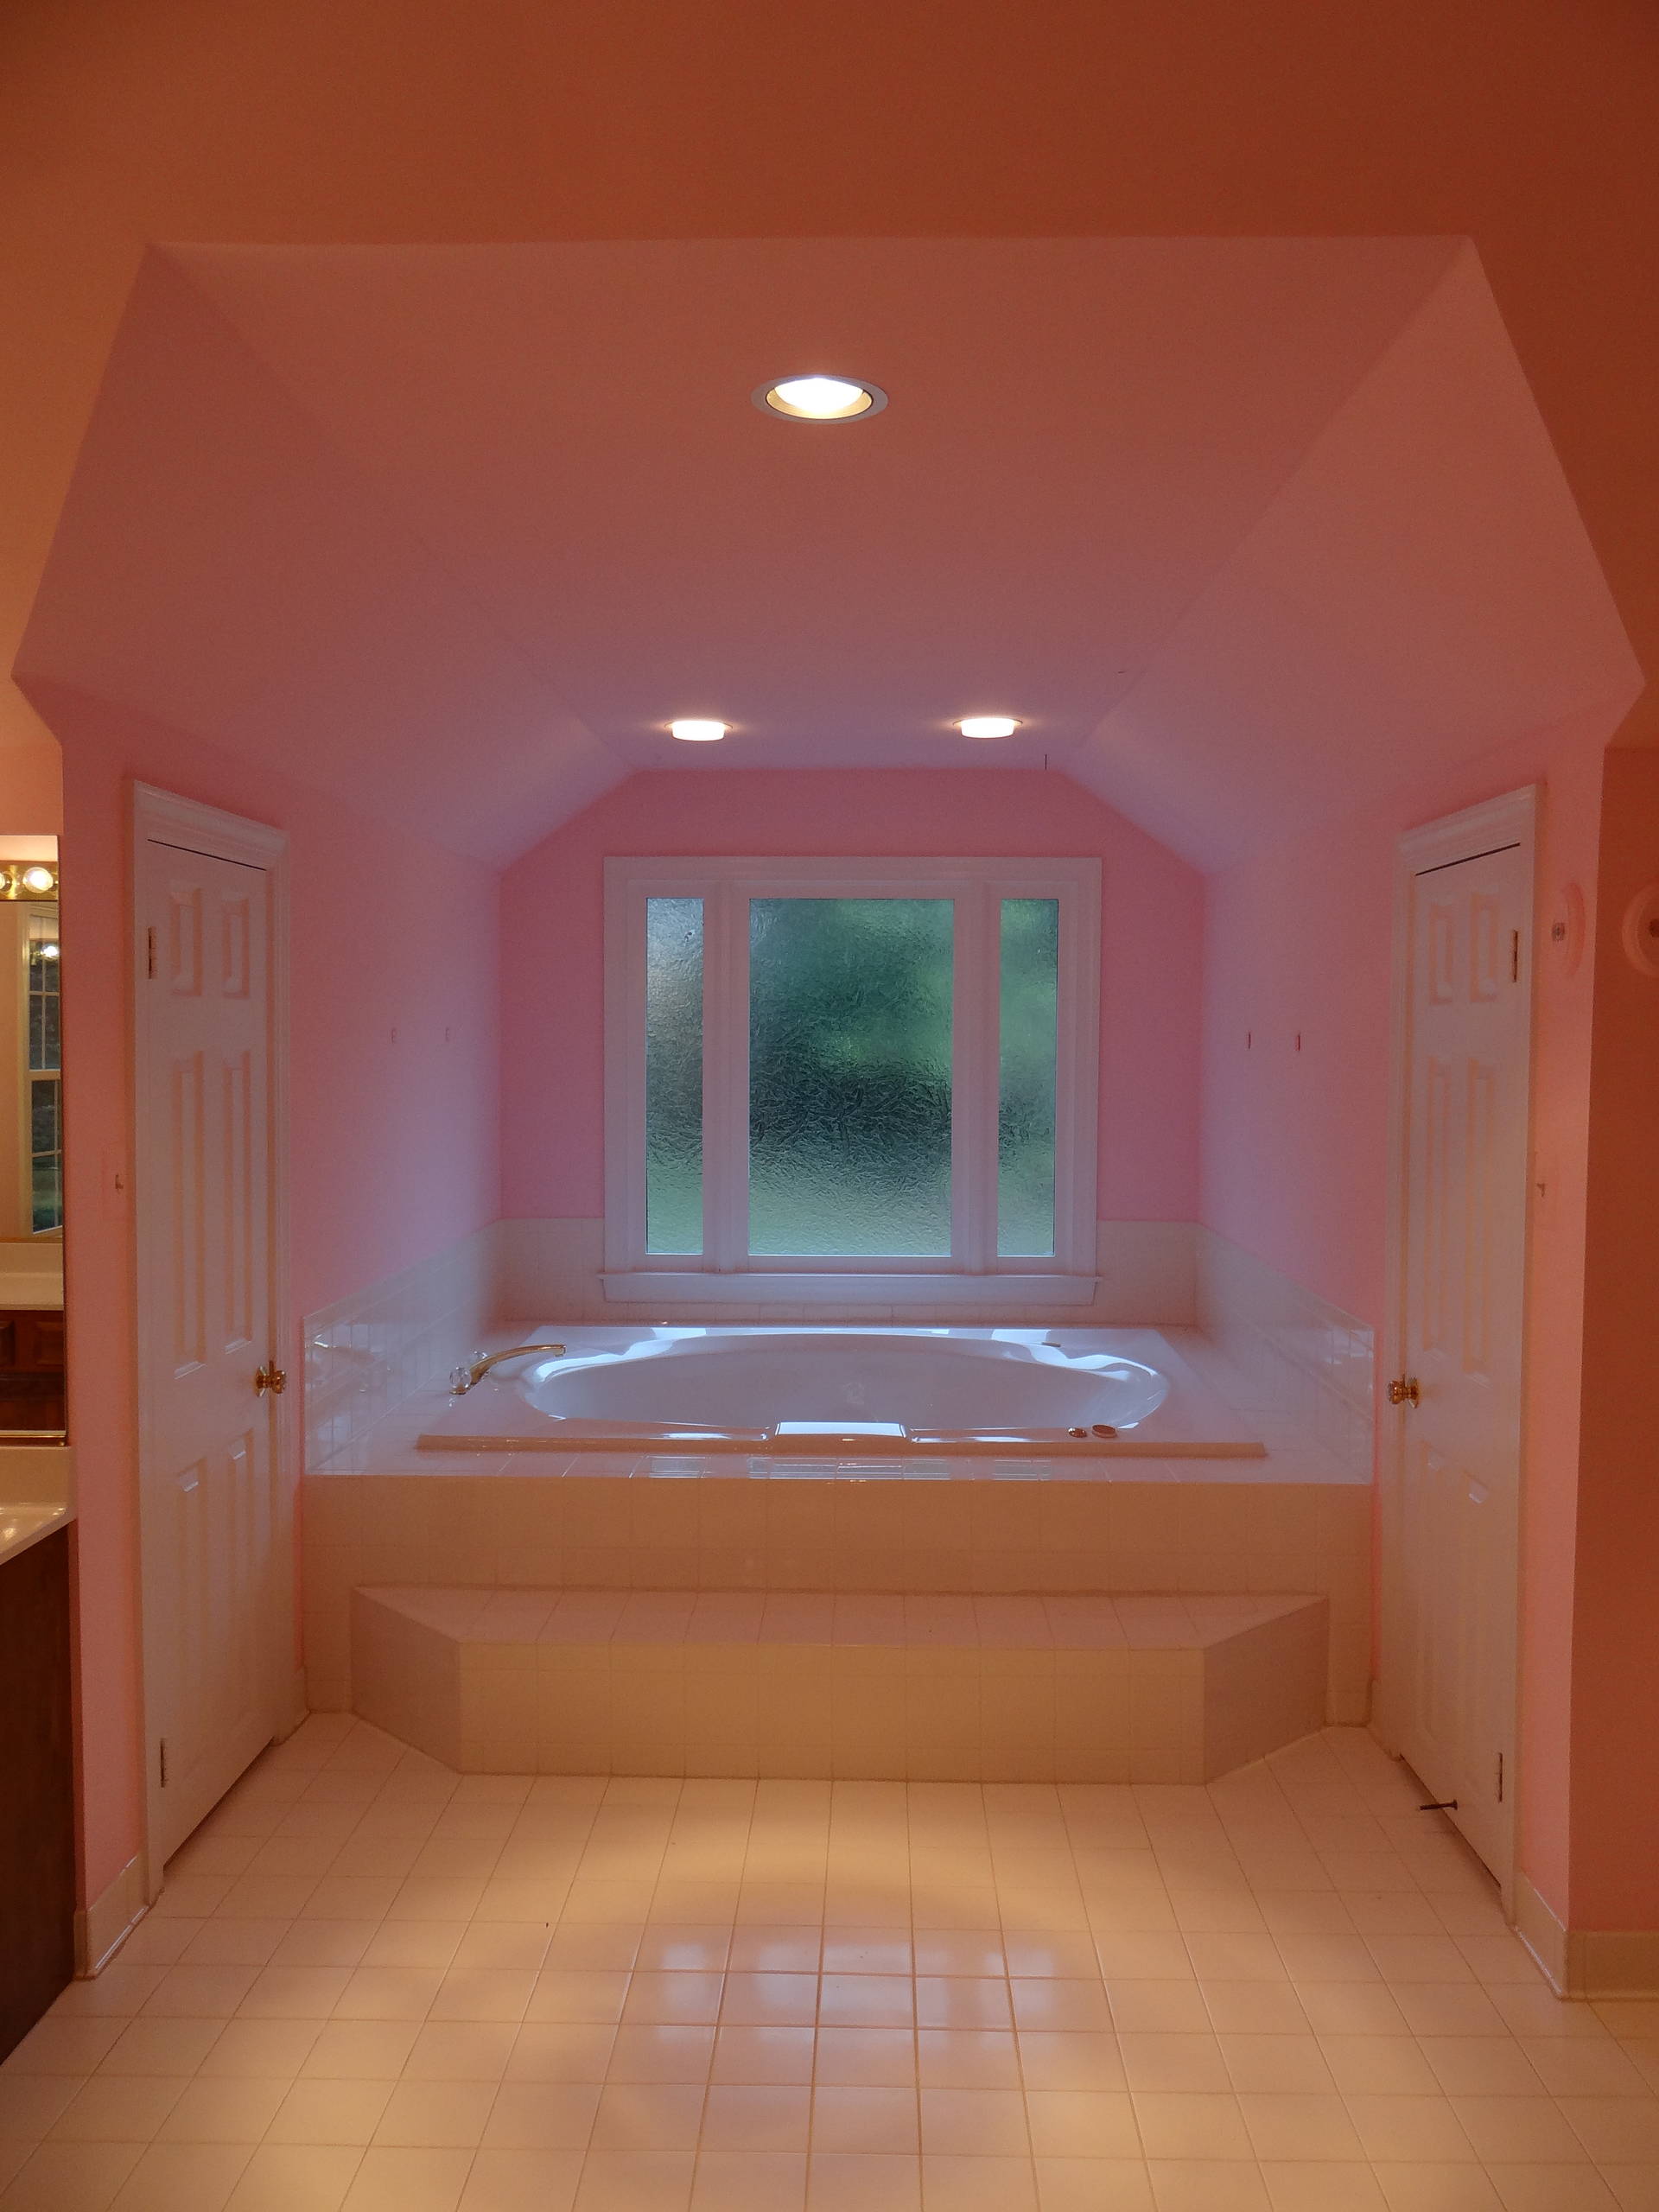 Fairfax Modern Rustic Master Bath: Before